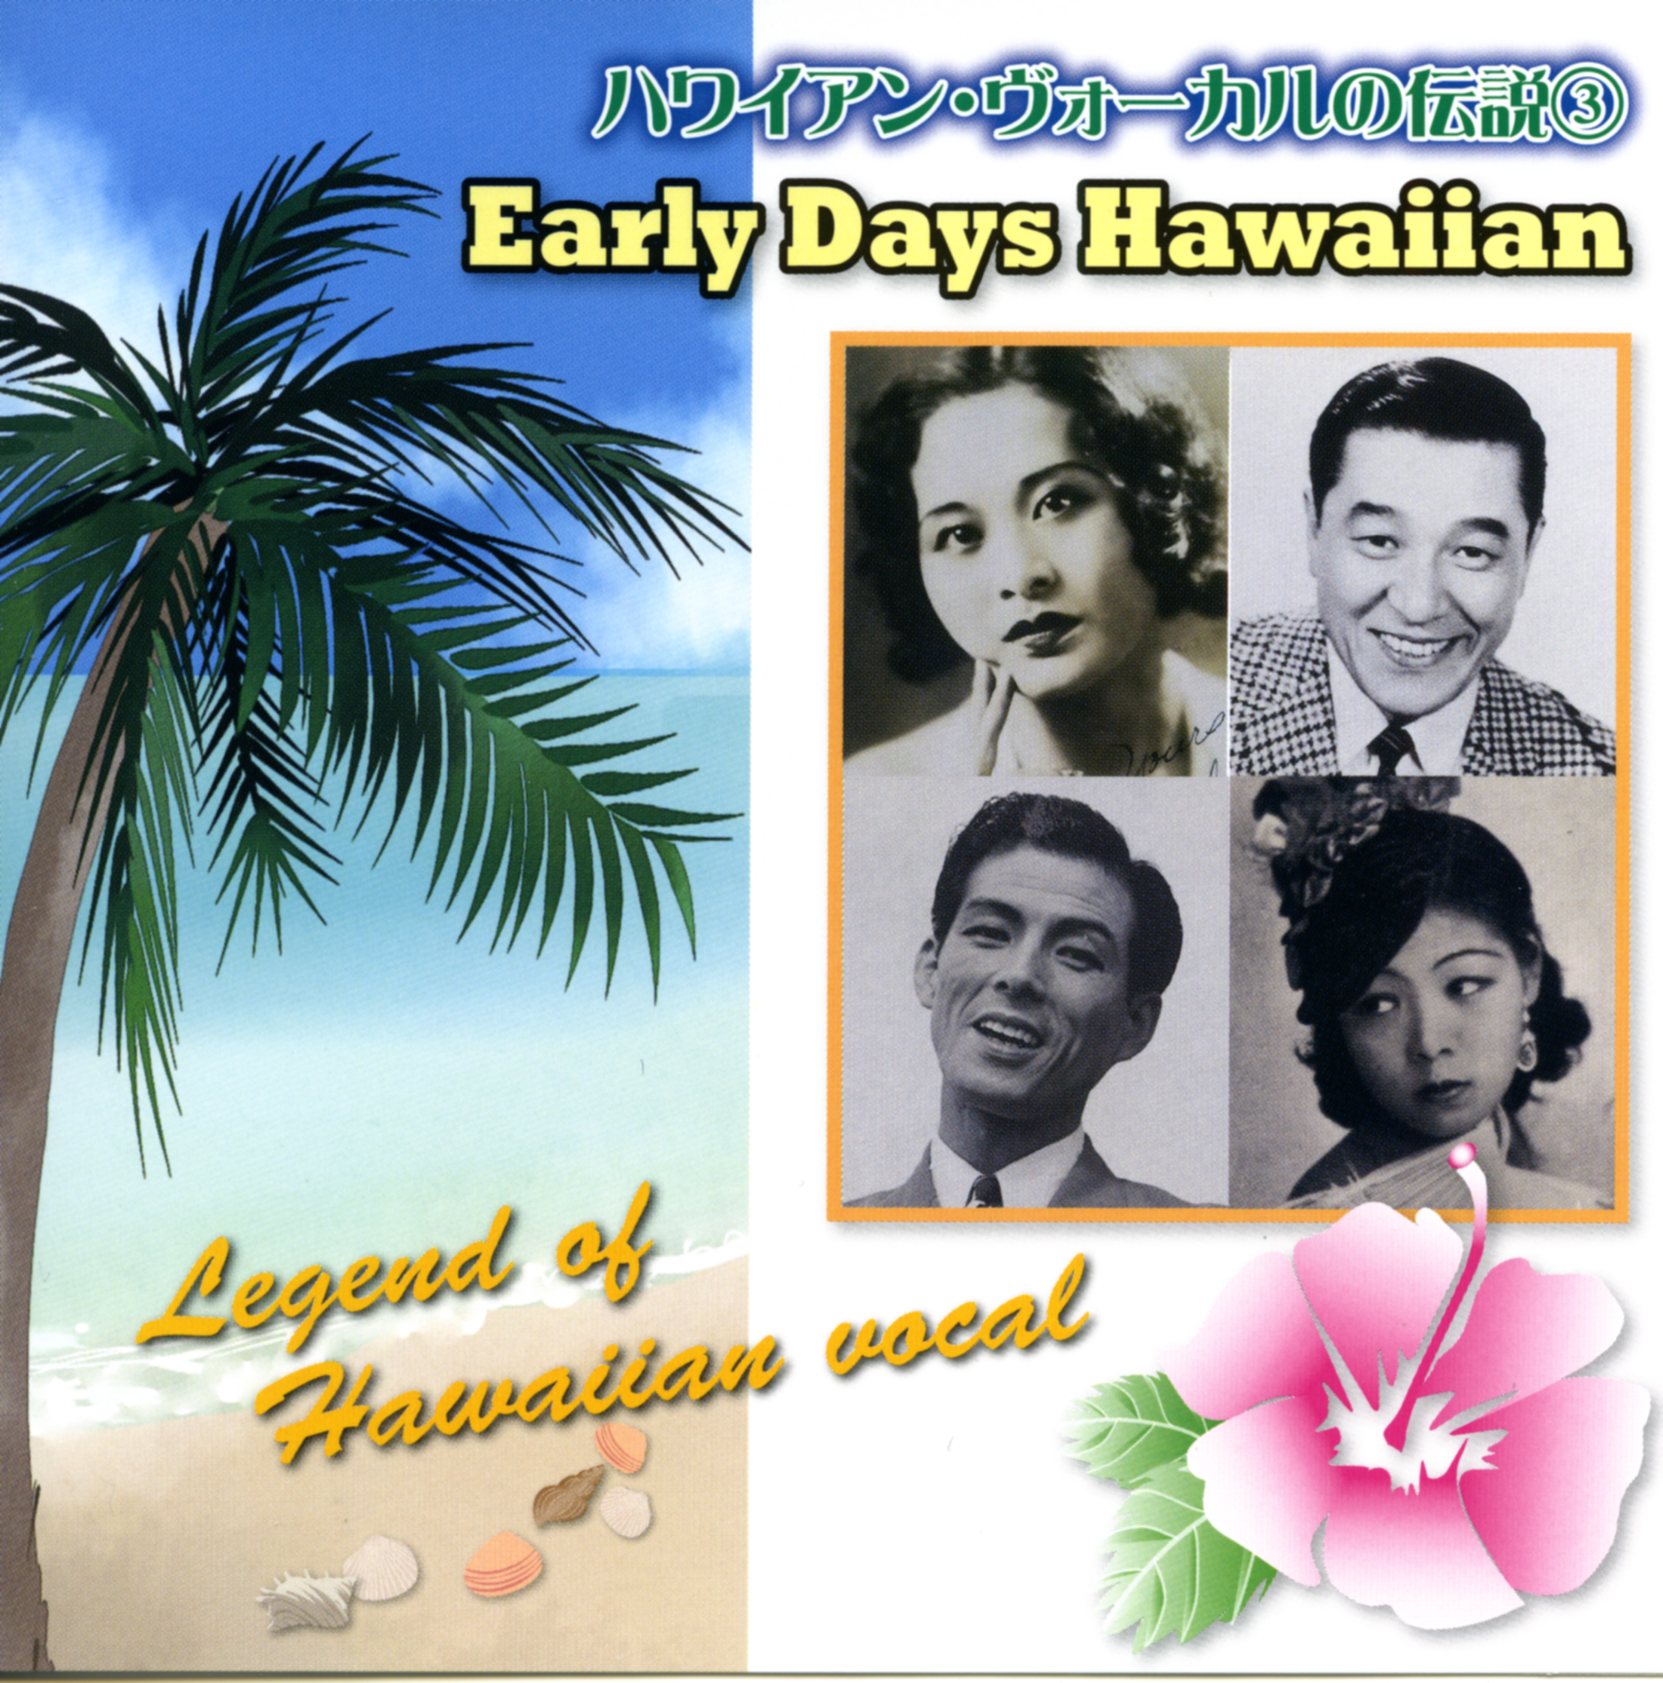 Early Days Hawaiian